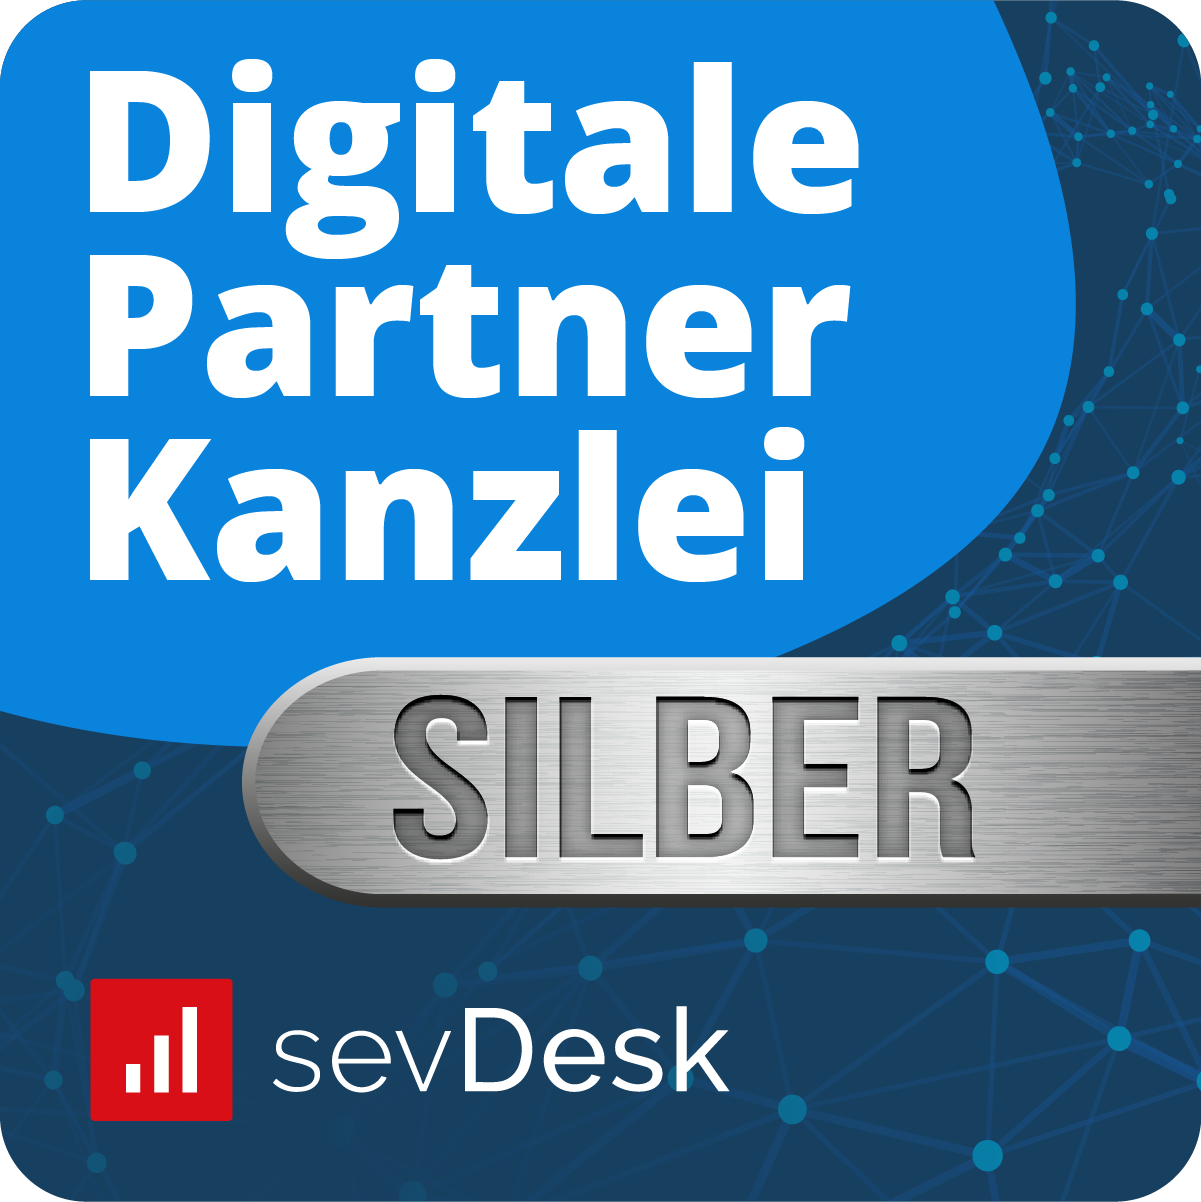 Digitale Partner Kanzlei Silber